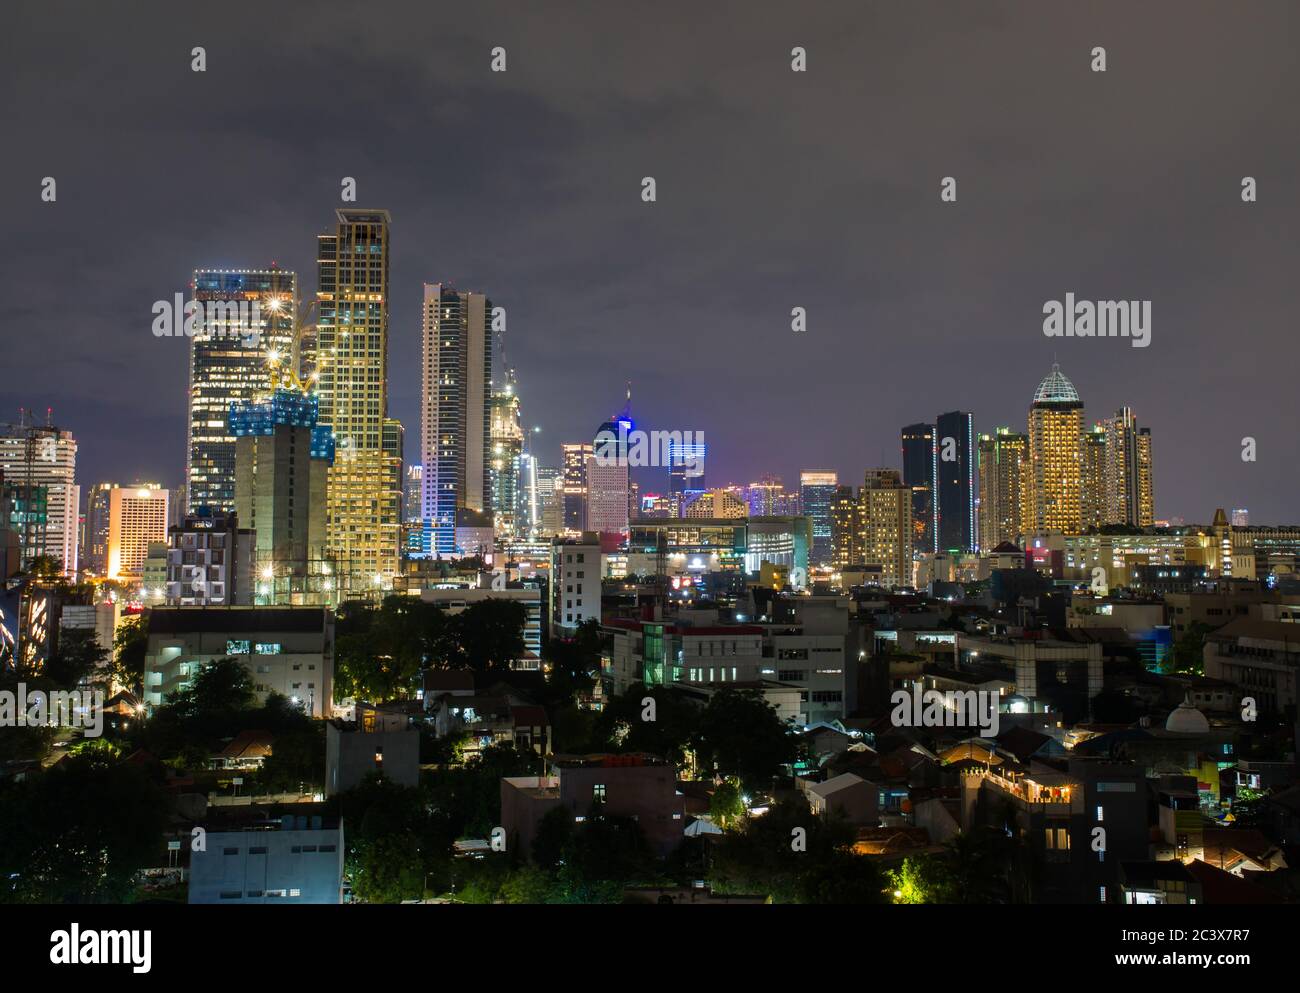 Night panorama of the capital of Indonesia - Jakarta. Stock Photo